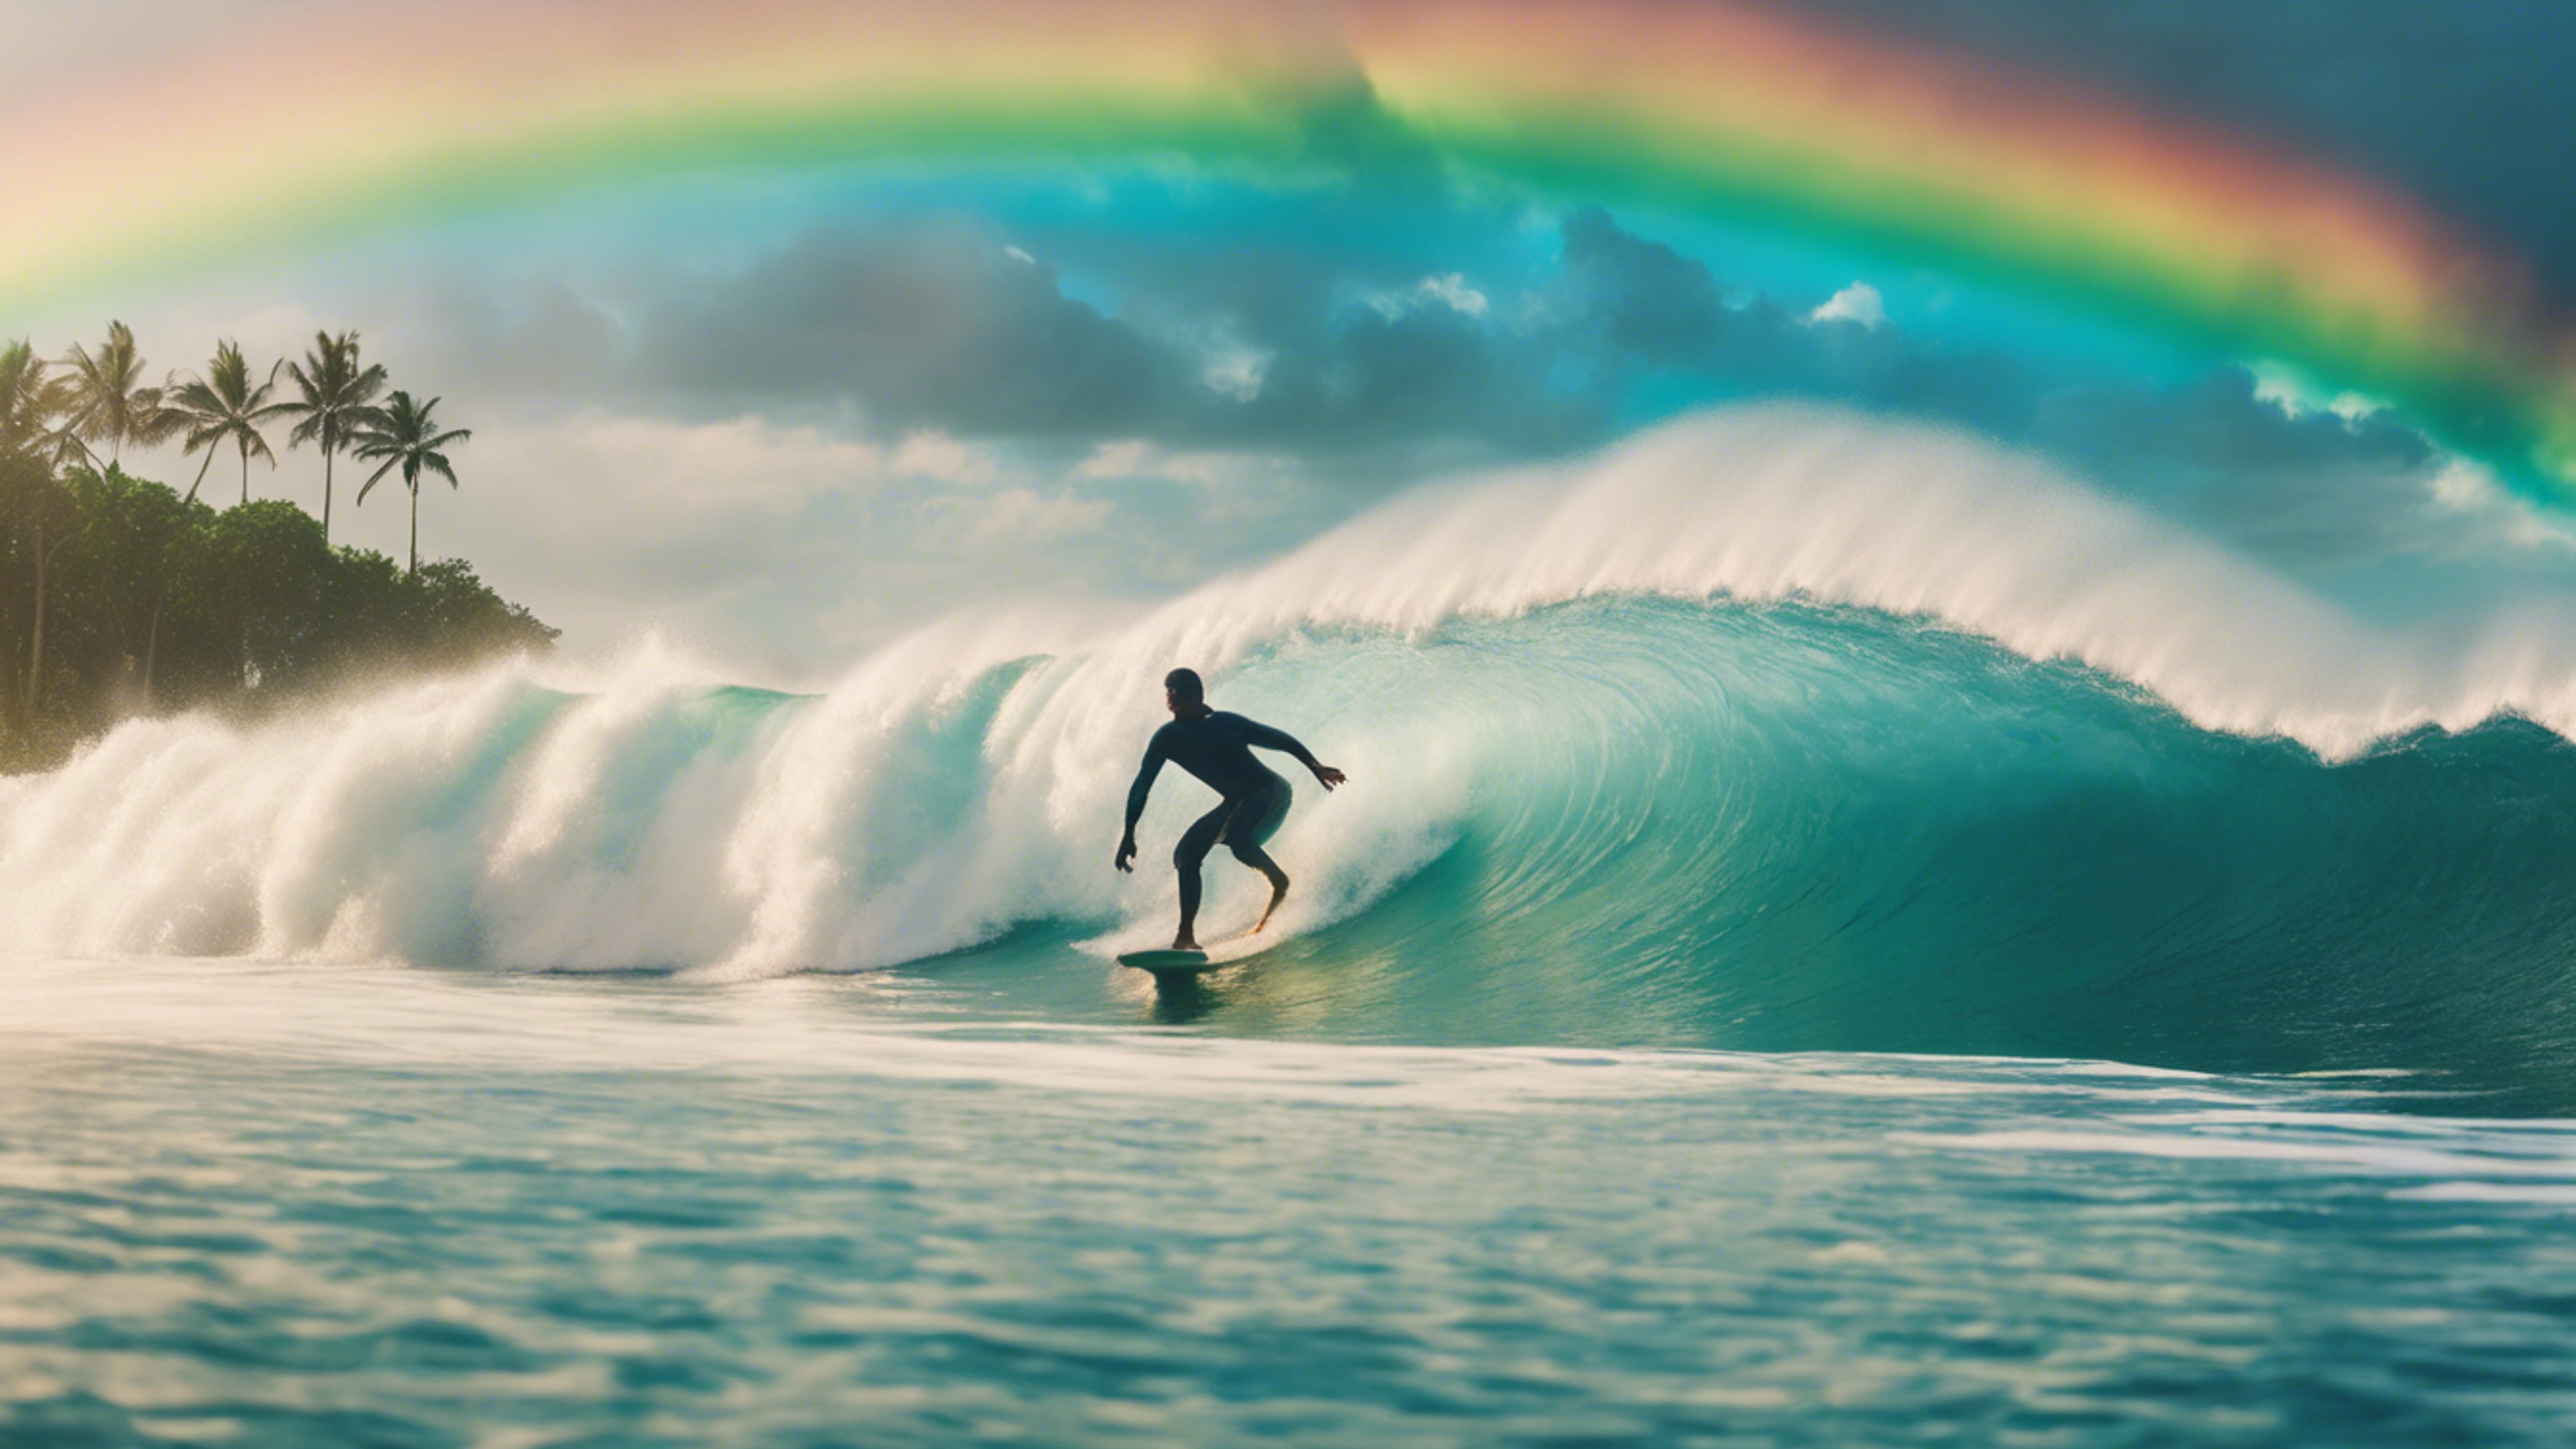 A spontaneous man surfing on a giant wave under a scintillating rainbow in a tropical ocean. Behang[41deec9b24da40d39c6d]